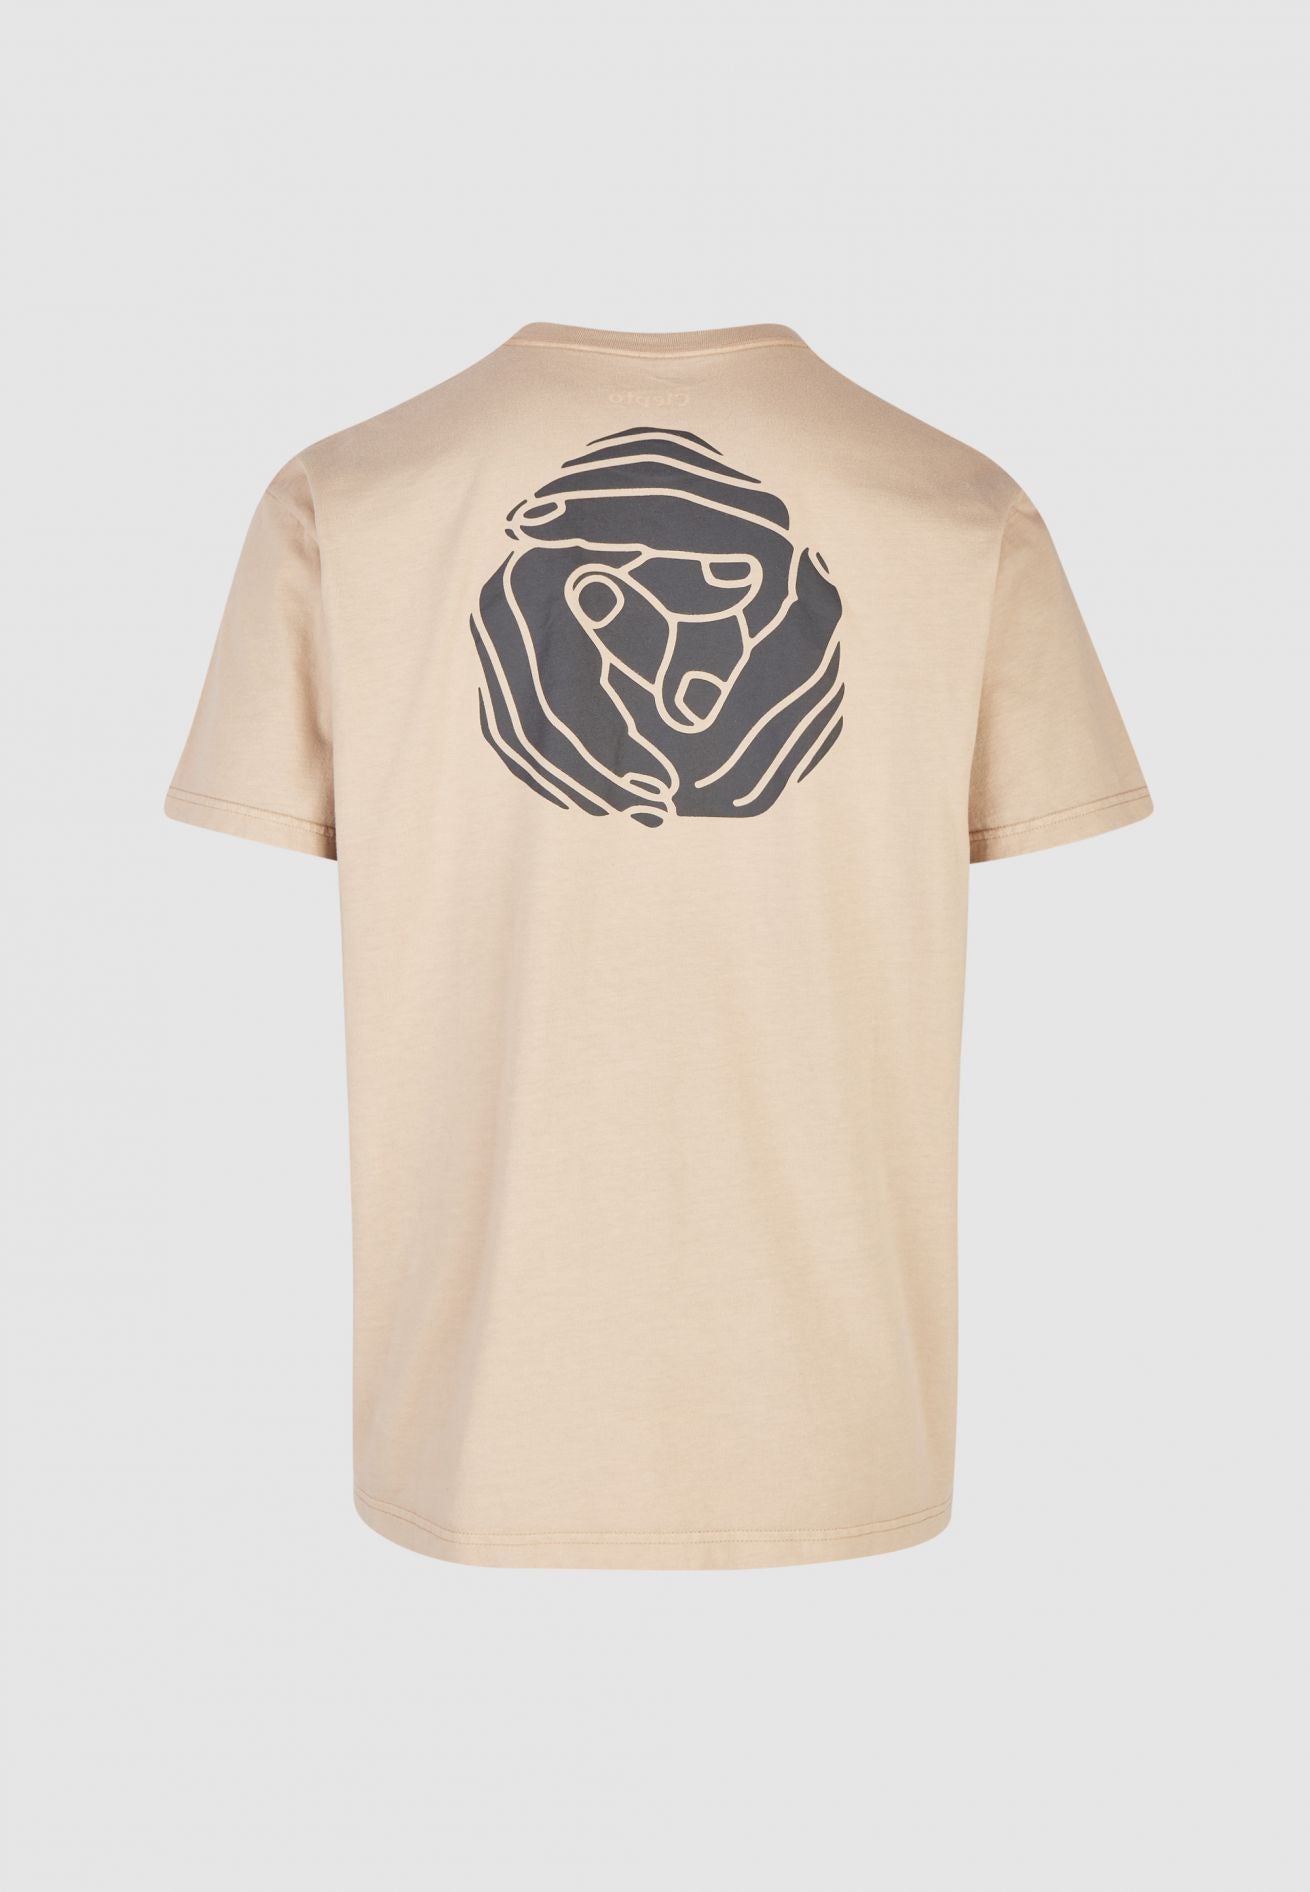 Cleptomanicx Boxy "Together" T-Shirt - Nomad